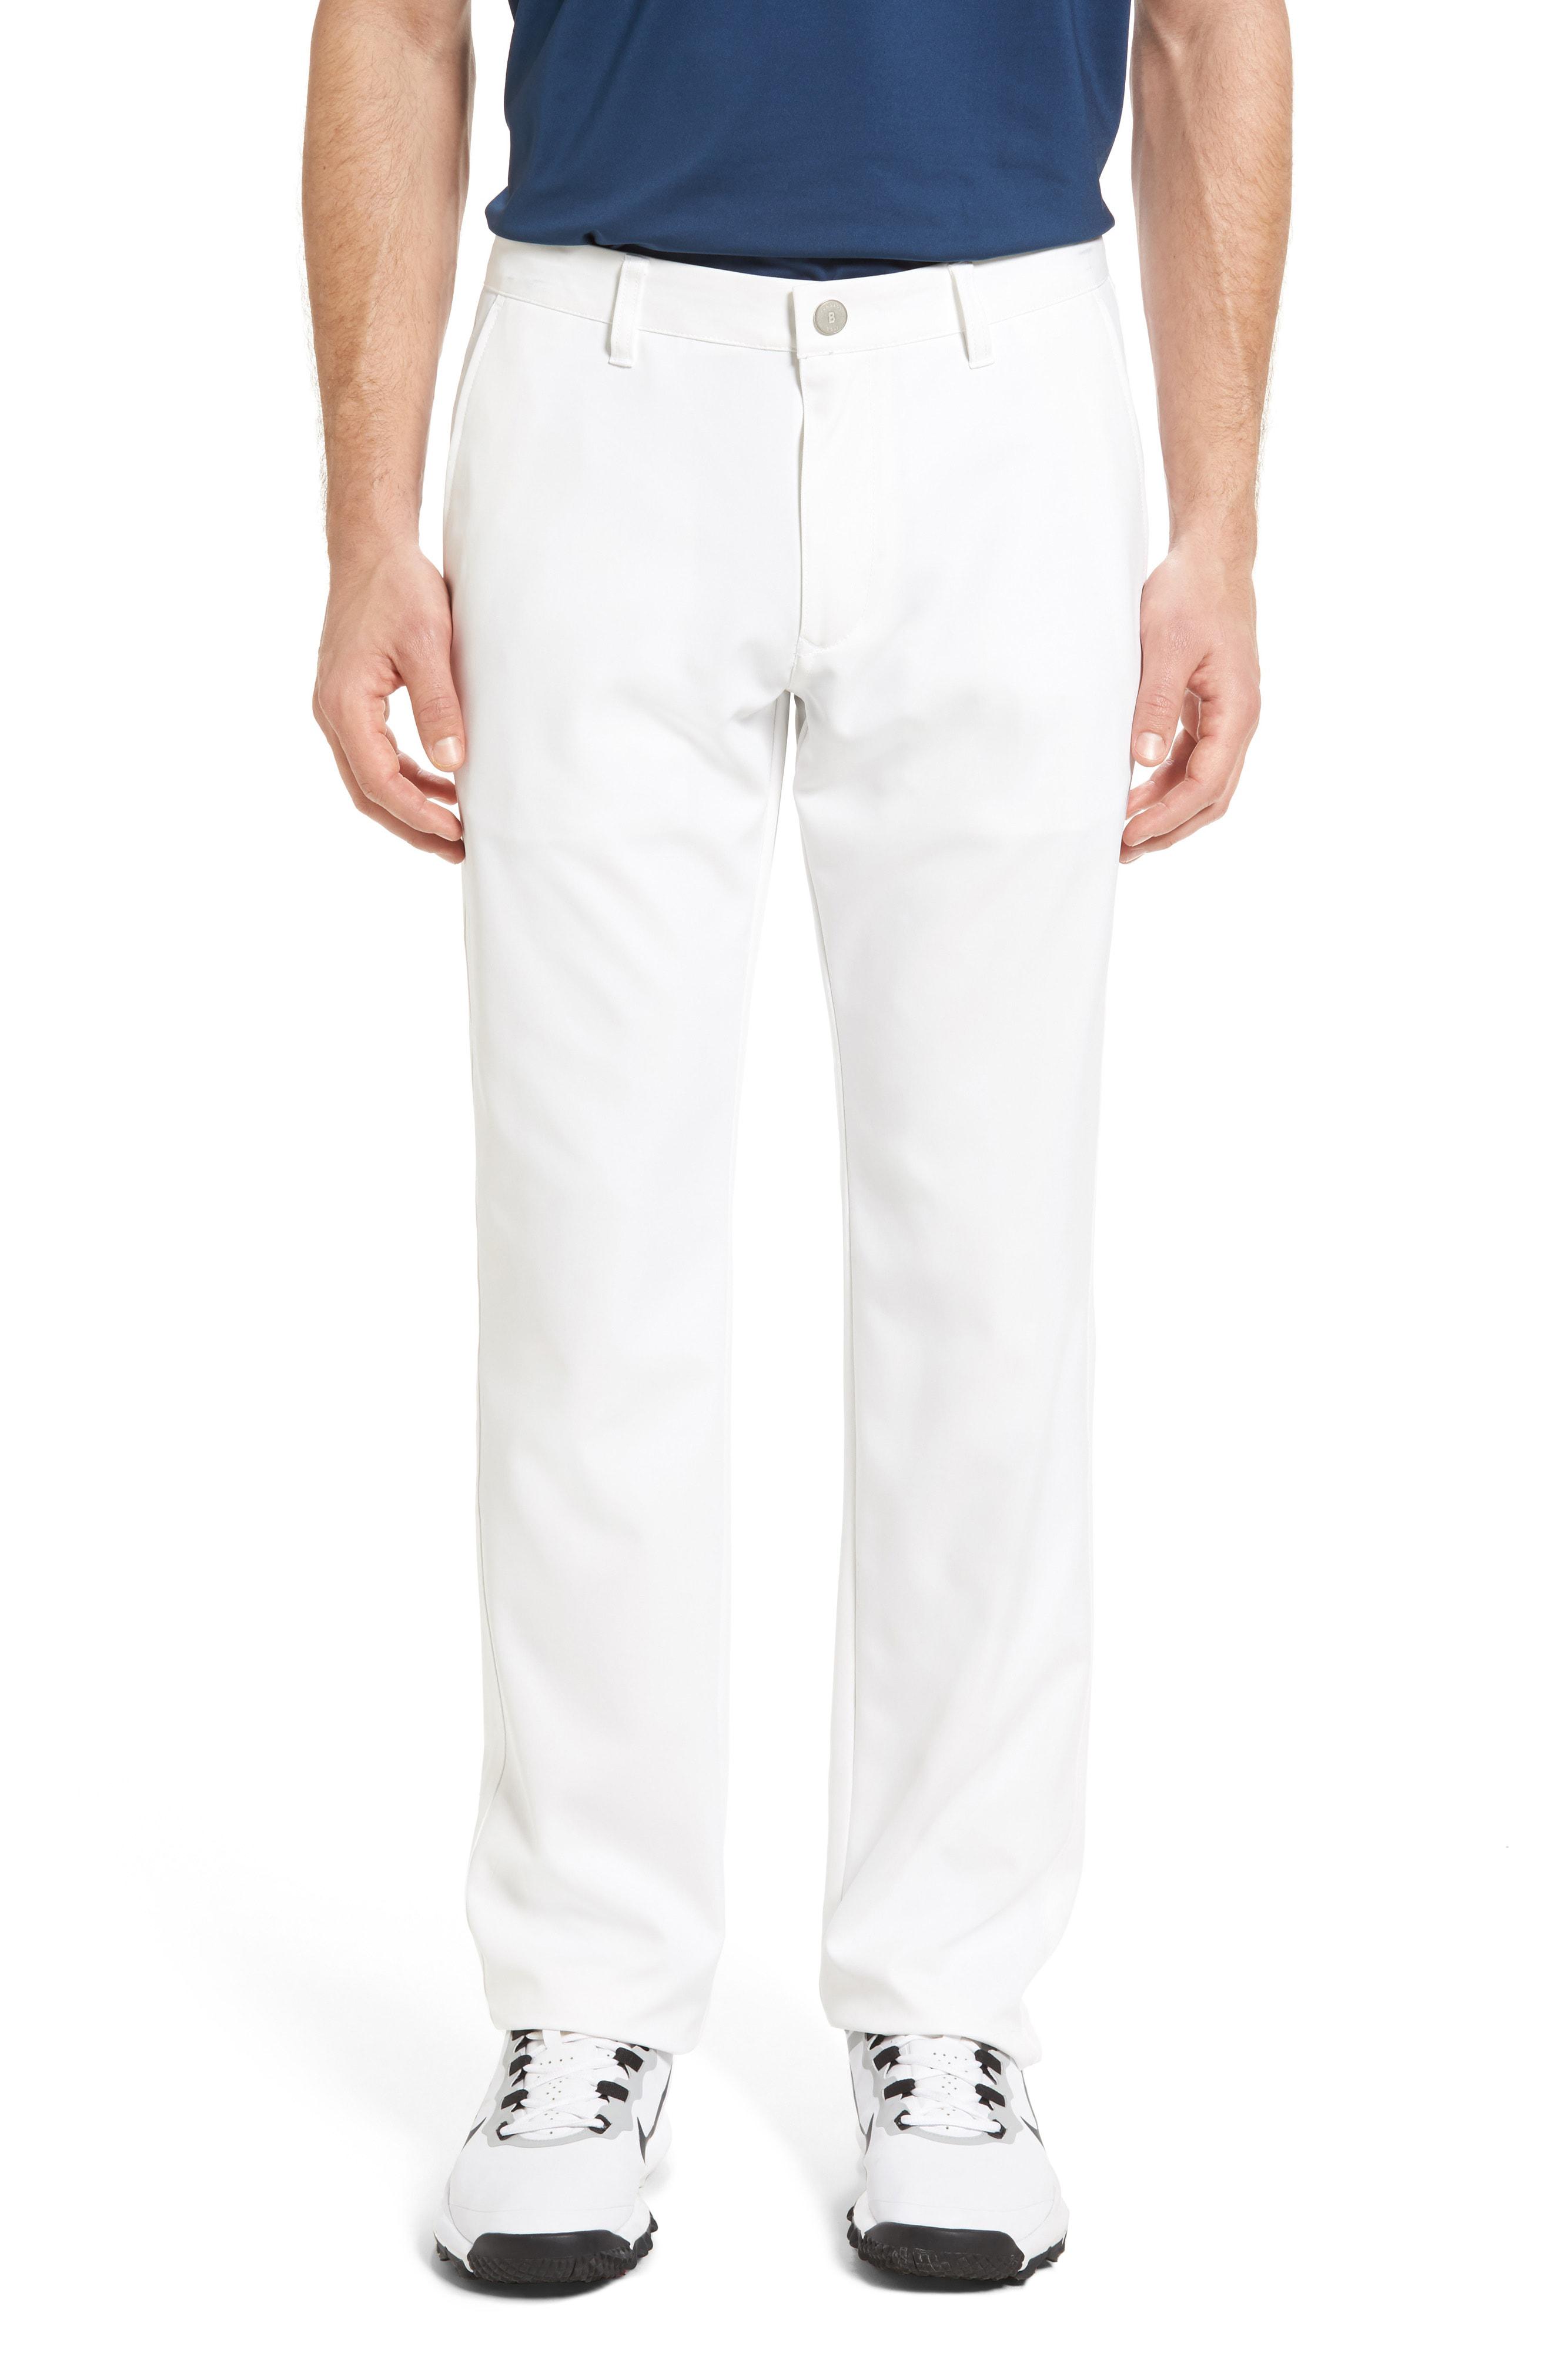 Bonobos Highland Slim Fit Golf Pants in White for Men - Lyst